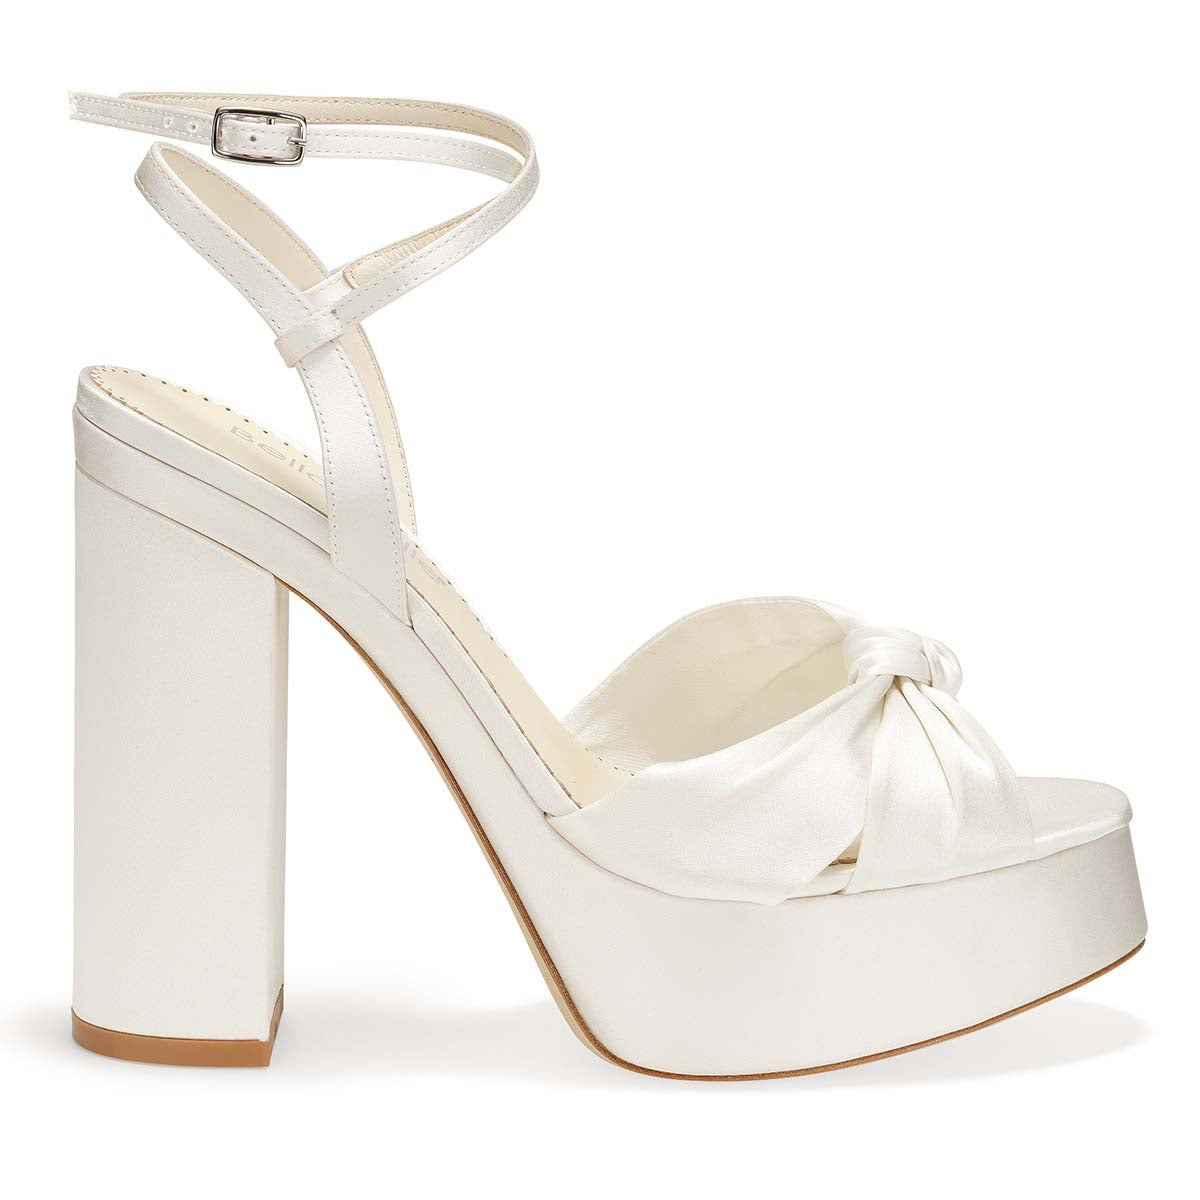 Chic & Elegant Block Heels Sandals at Rs 499.00 | High Heel Sandal | ID:  2853160916848